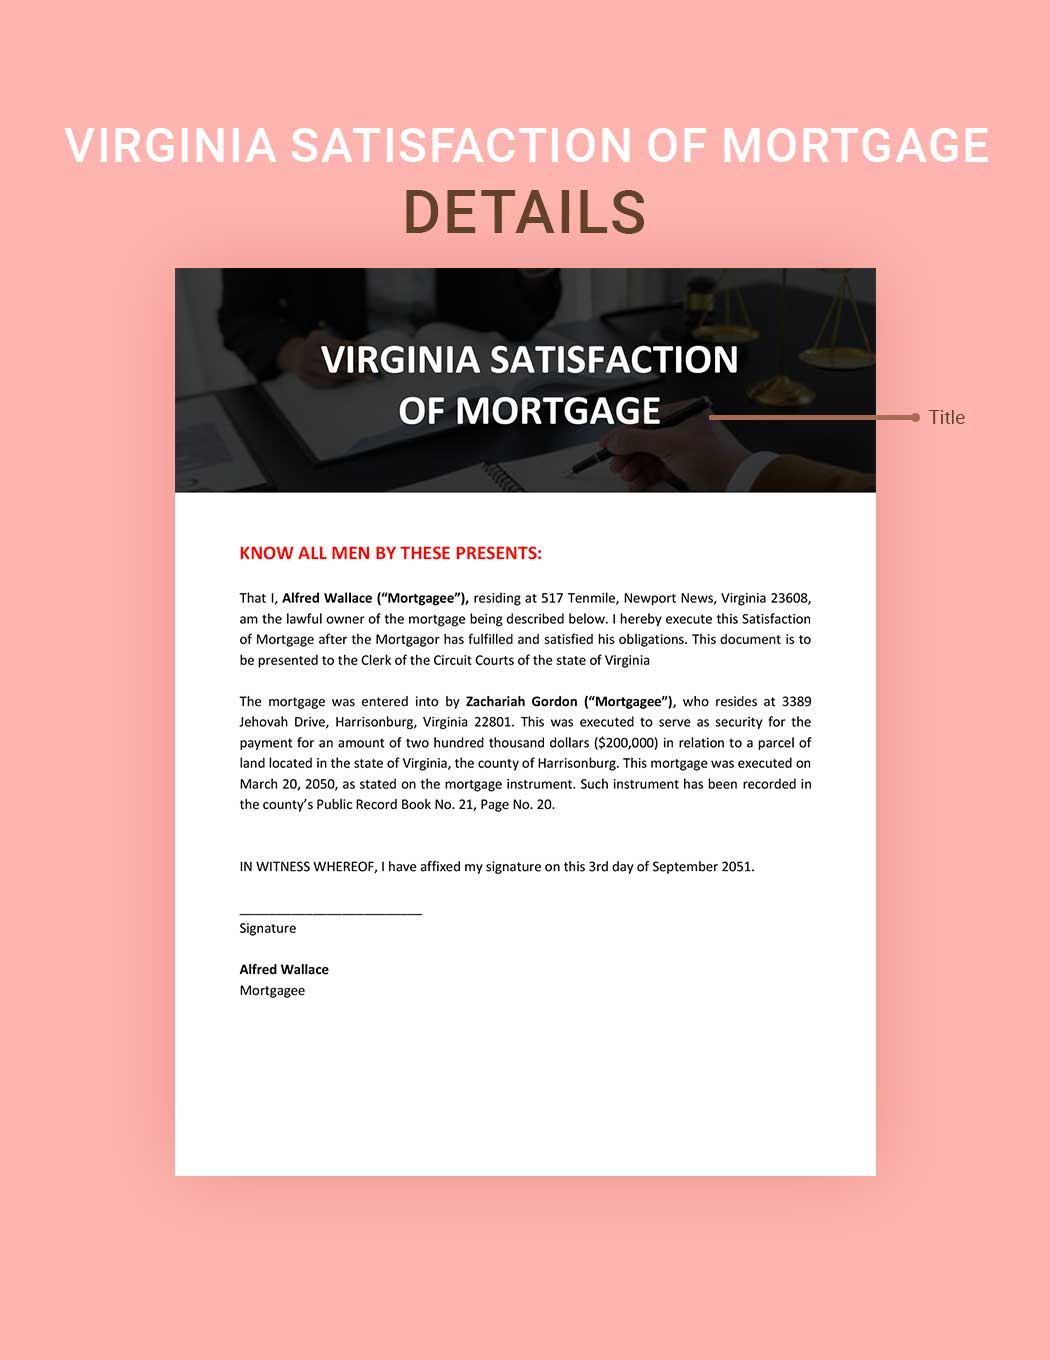 Virginia Satisfaction of Mortgage Template